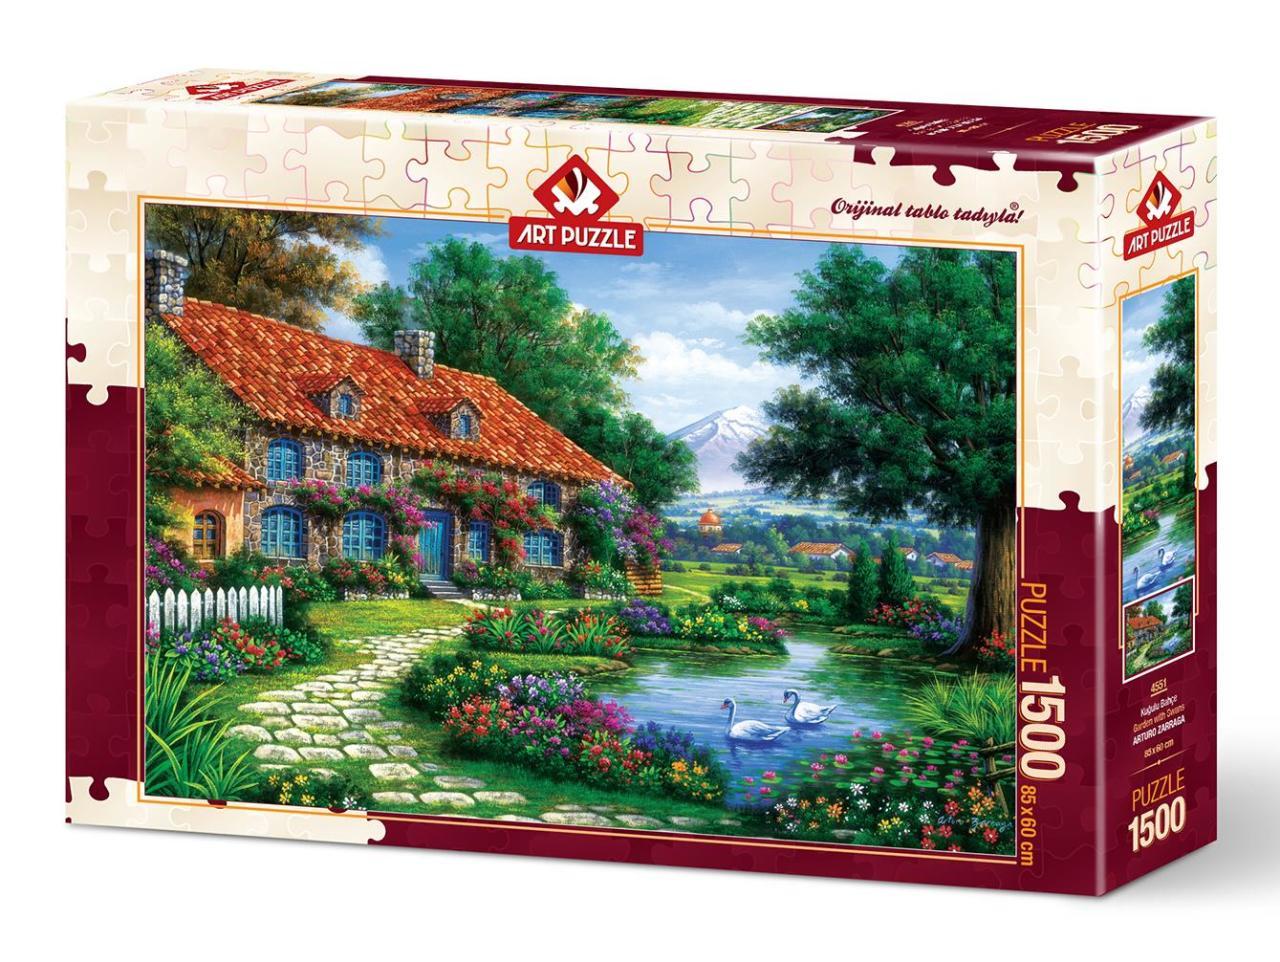 Art Puzzle - The Garden - 1500 Piece Jigsaw Puzzle